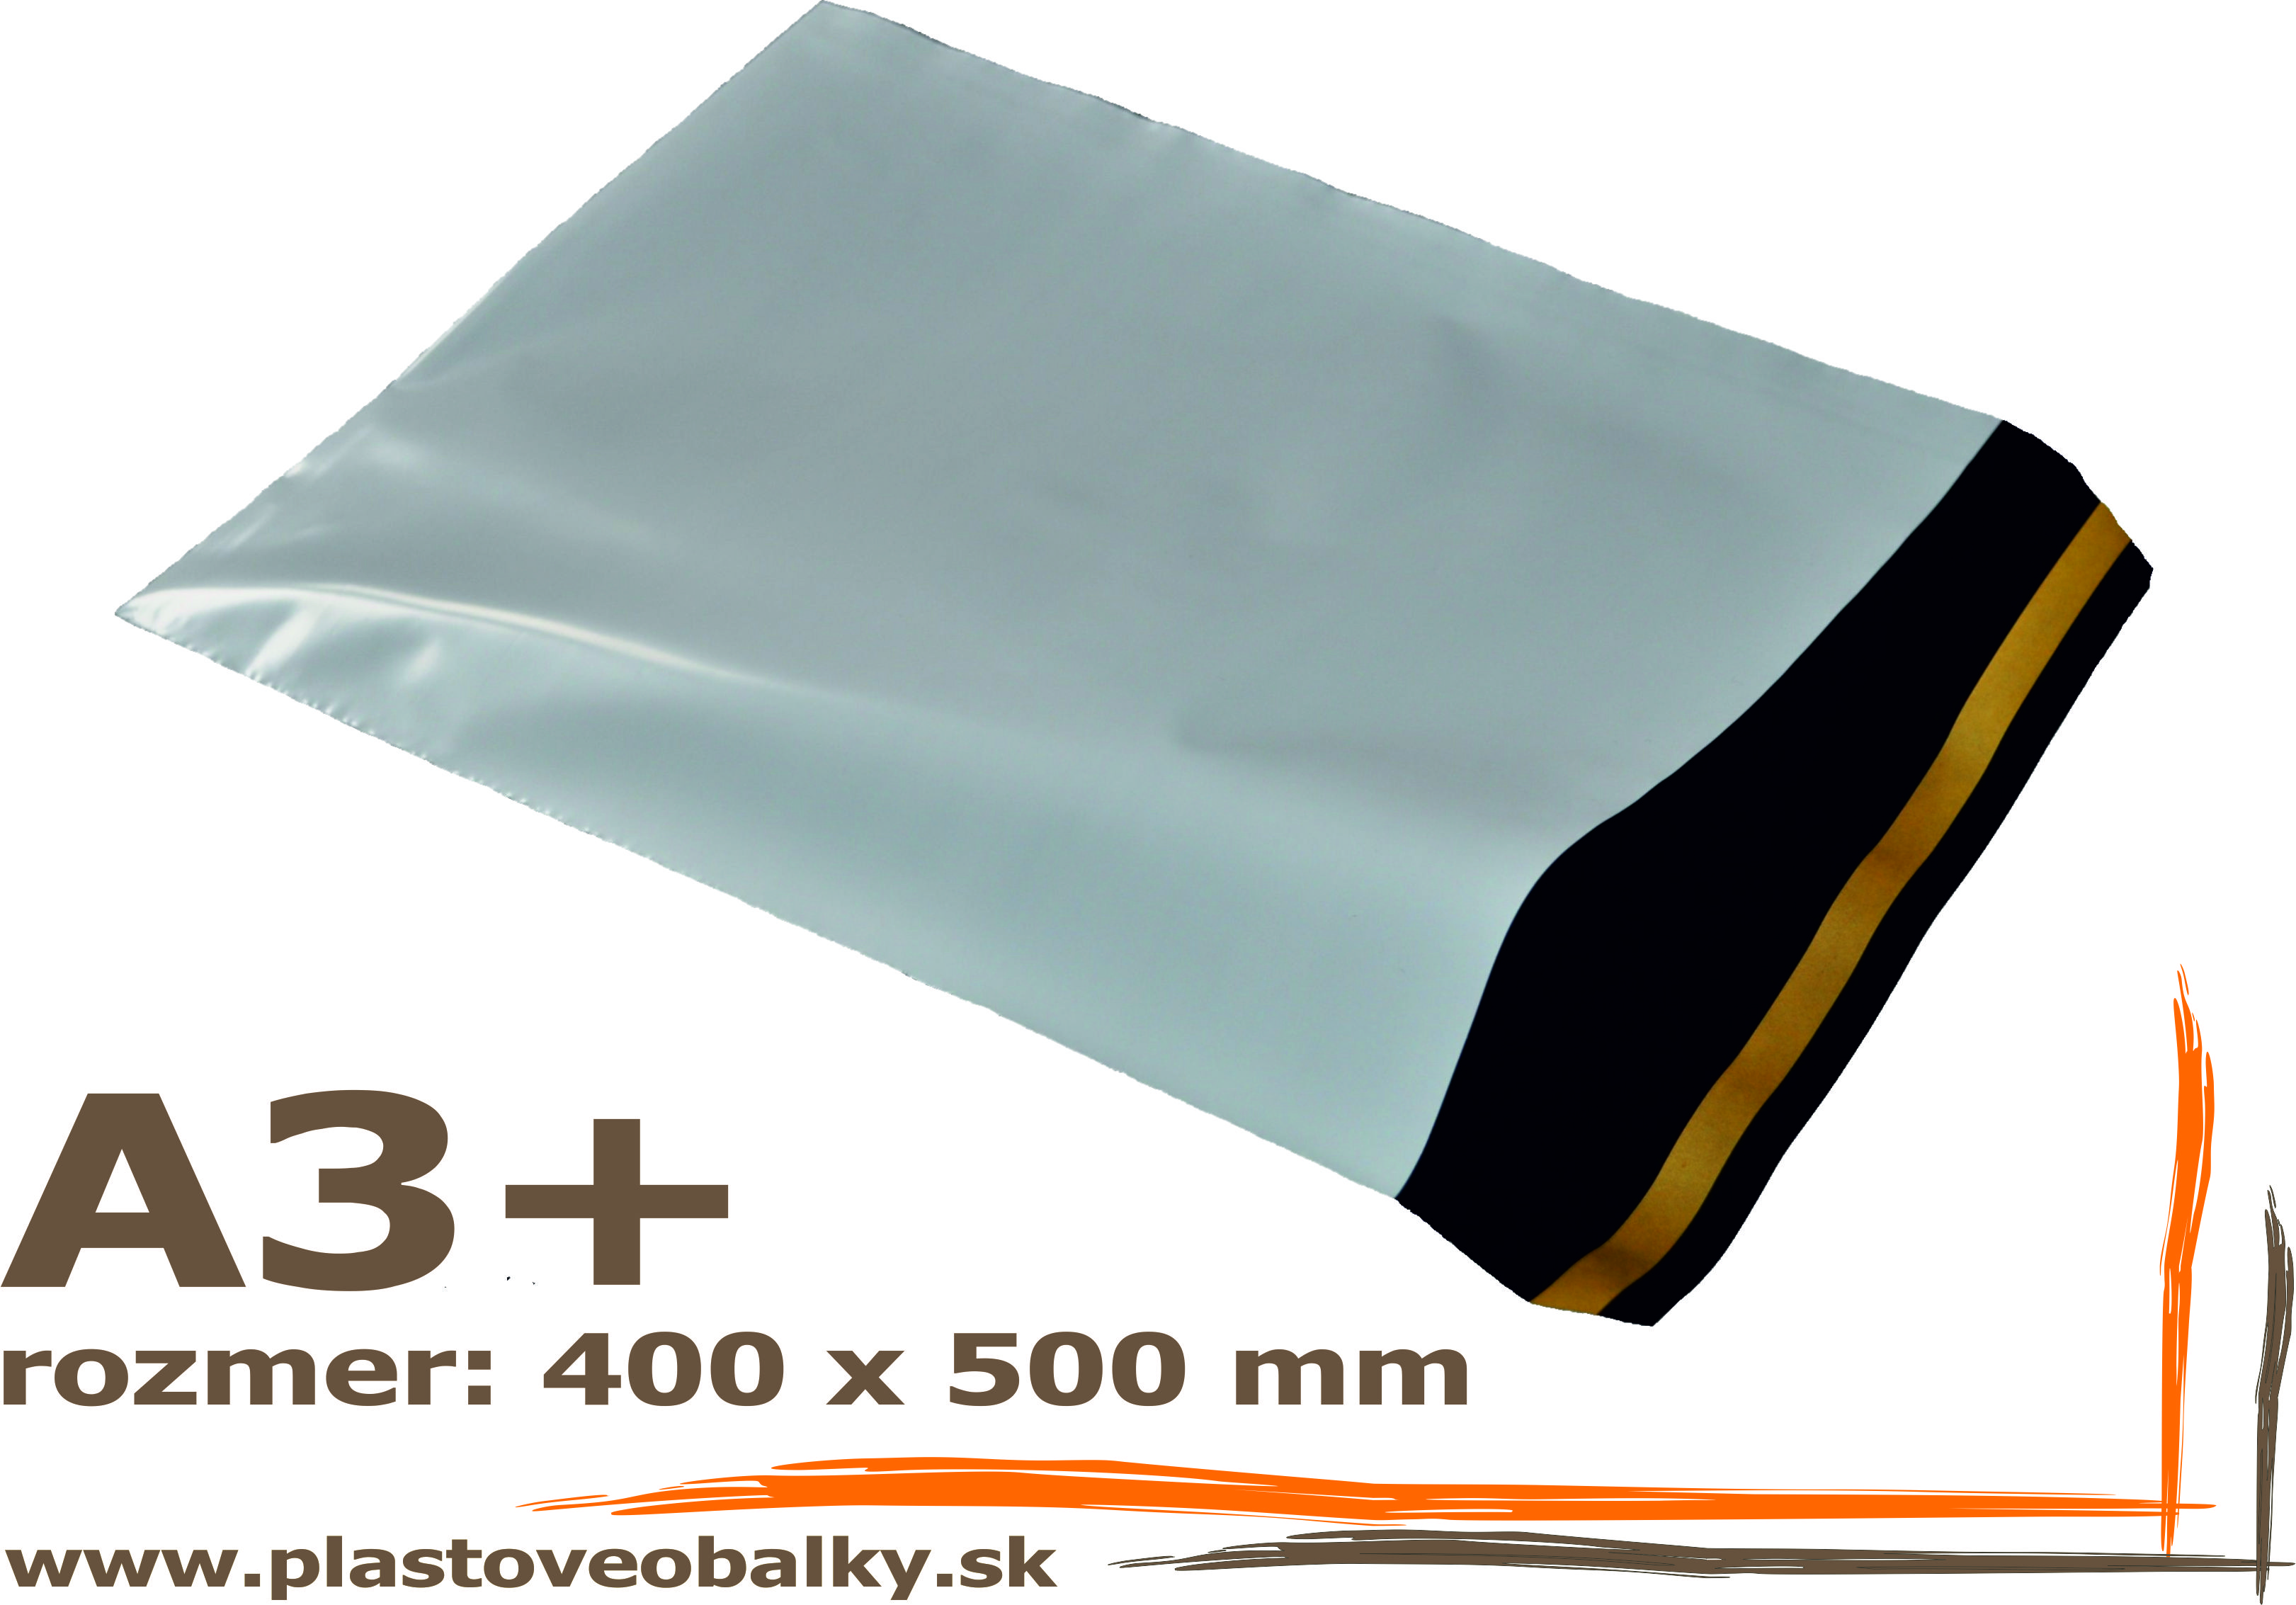 Plastové obálky formát A3+ balenie 500ks